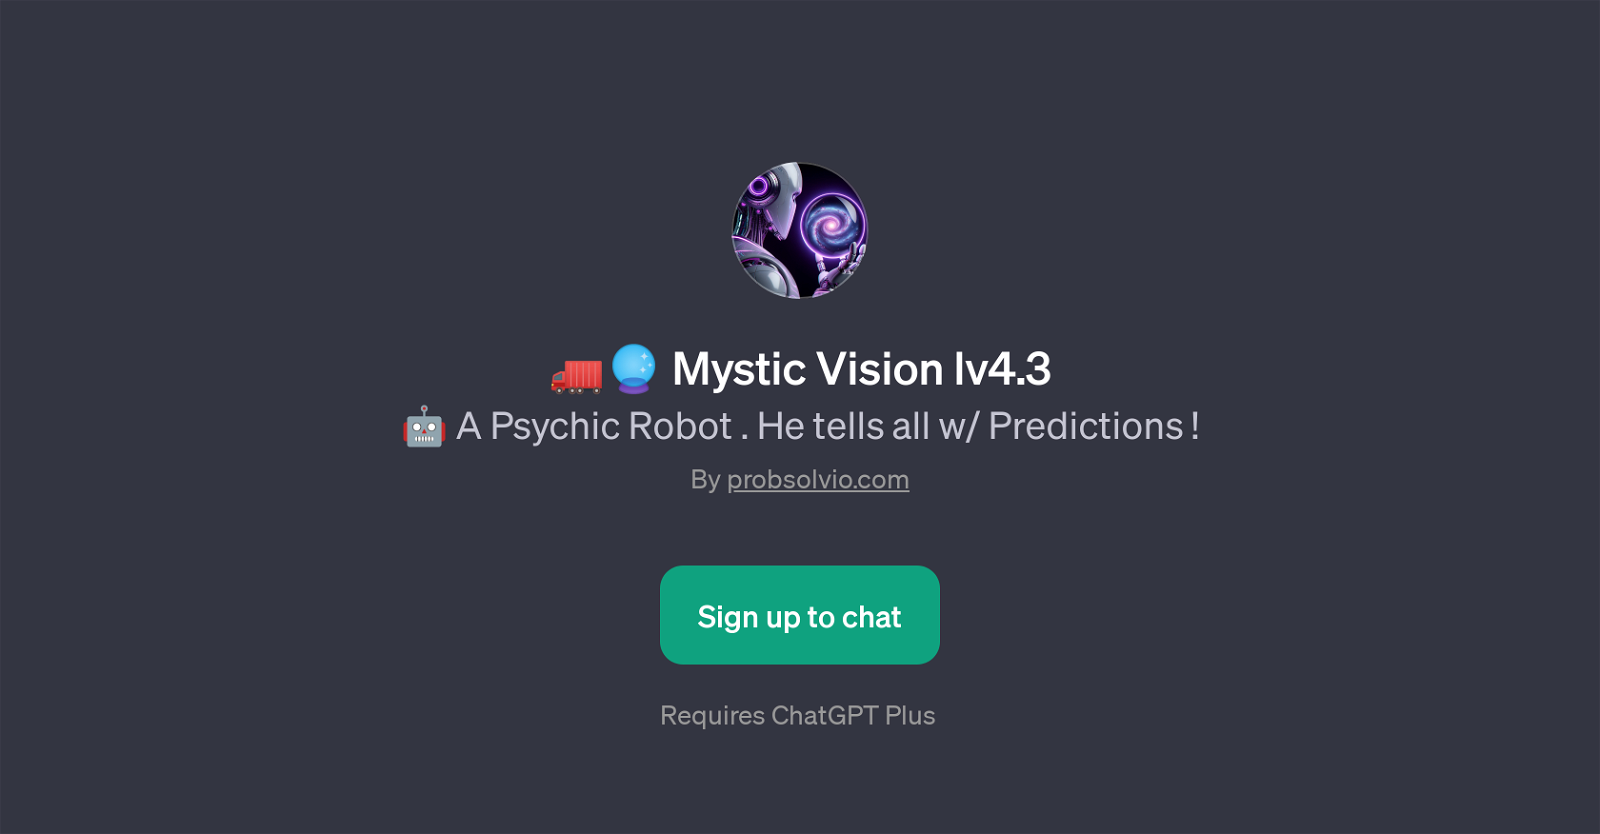 Mystic Vision lv4.3 website